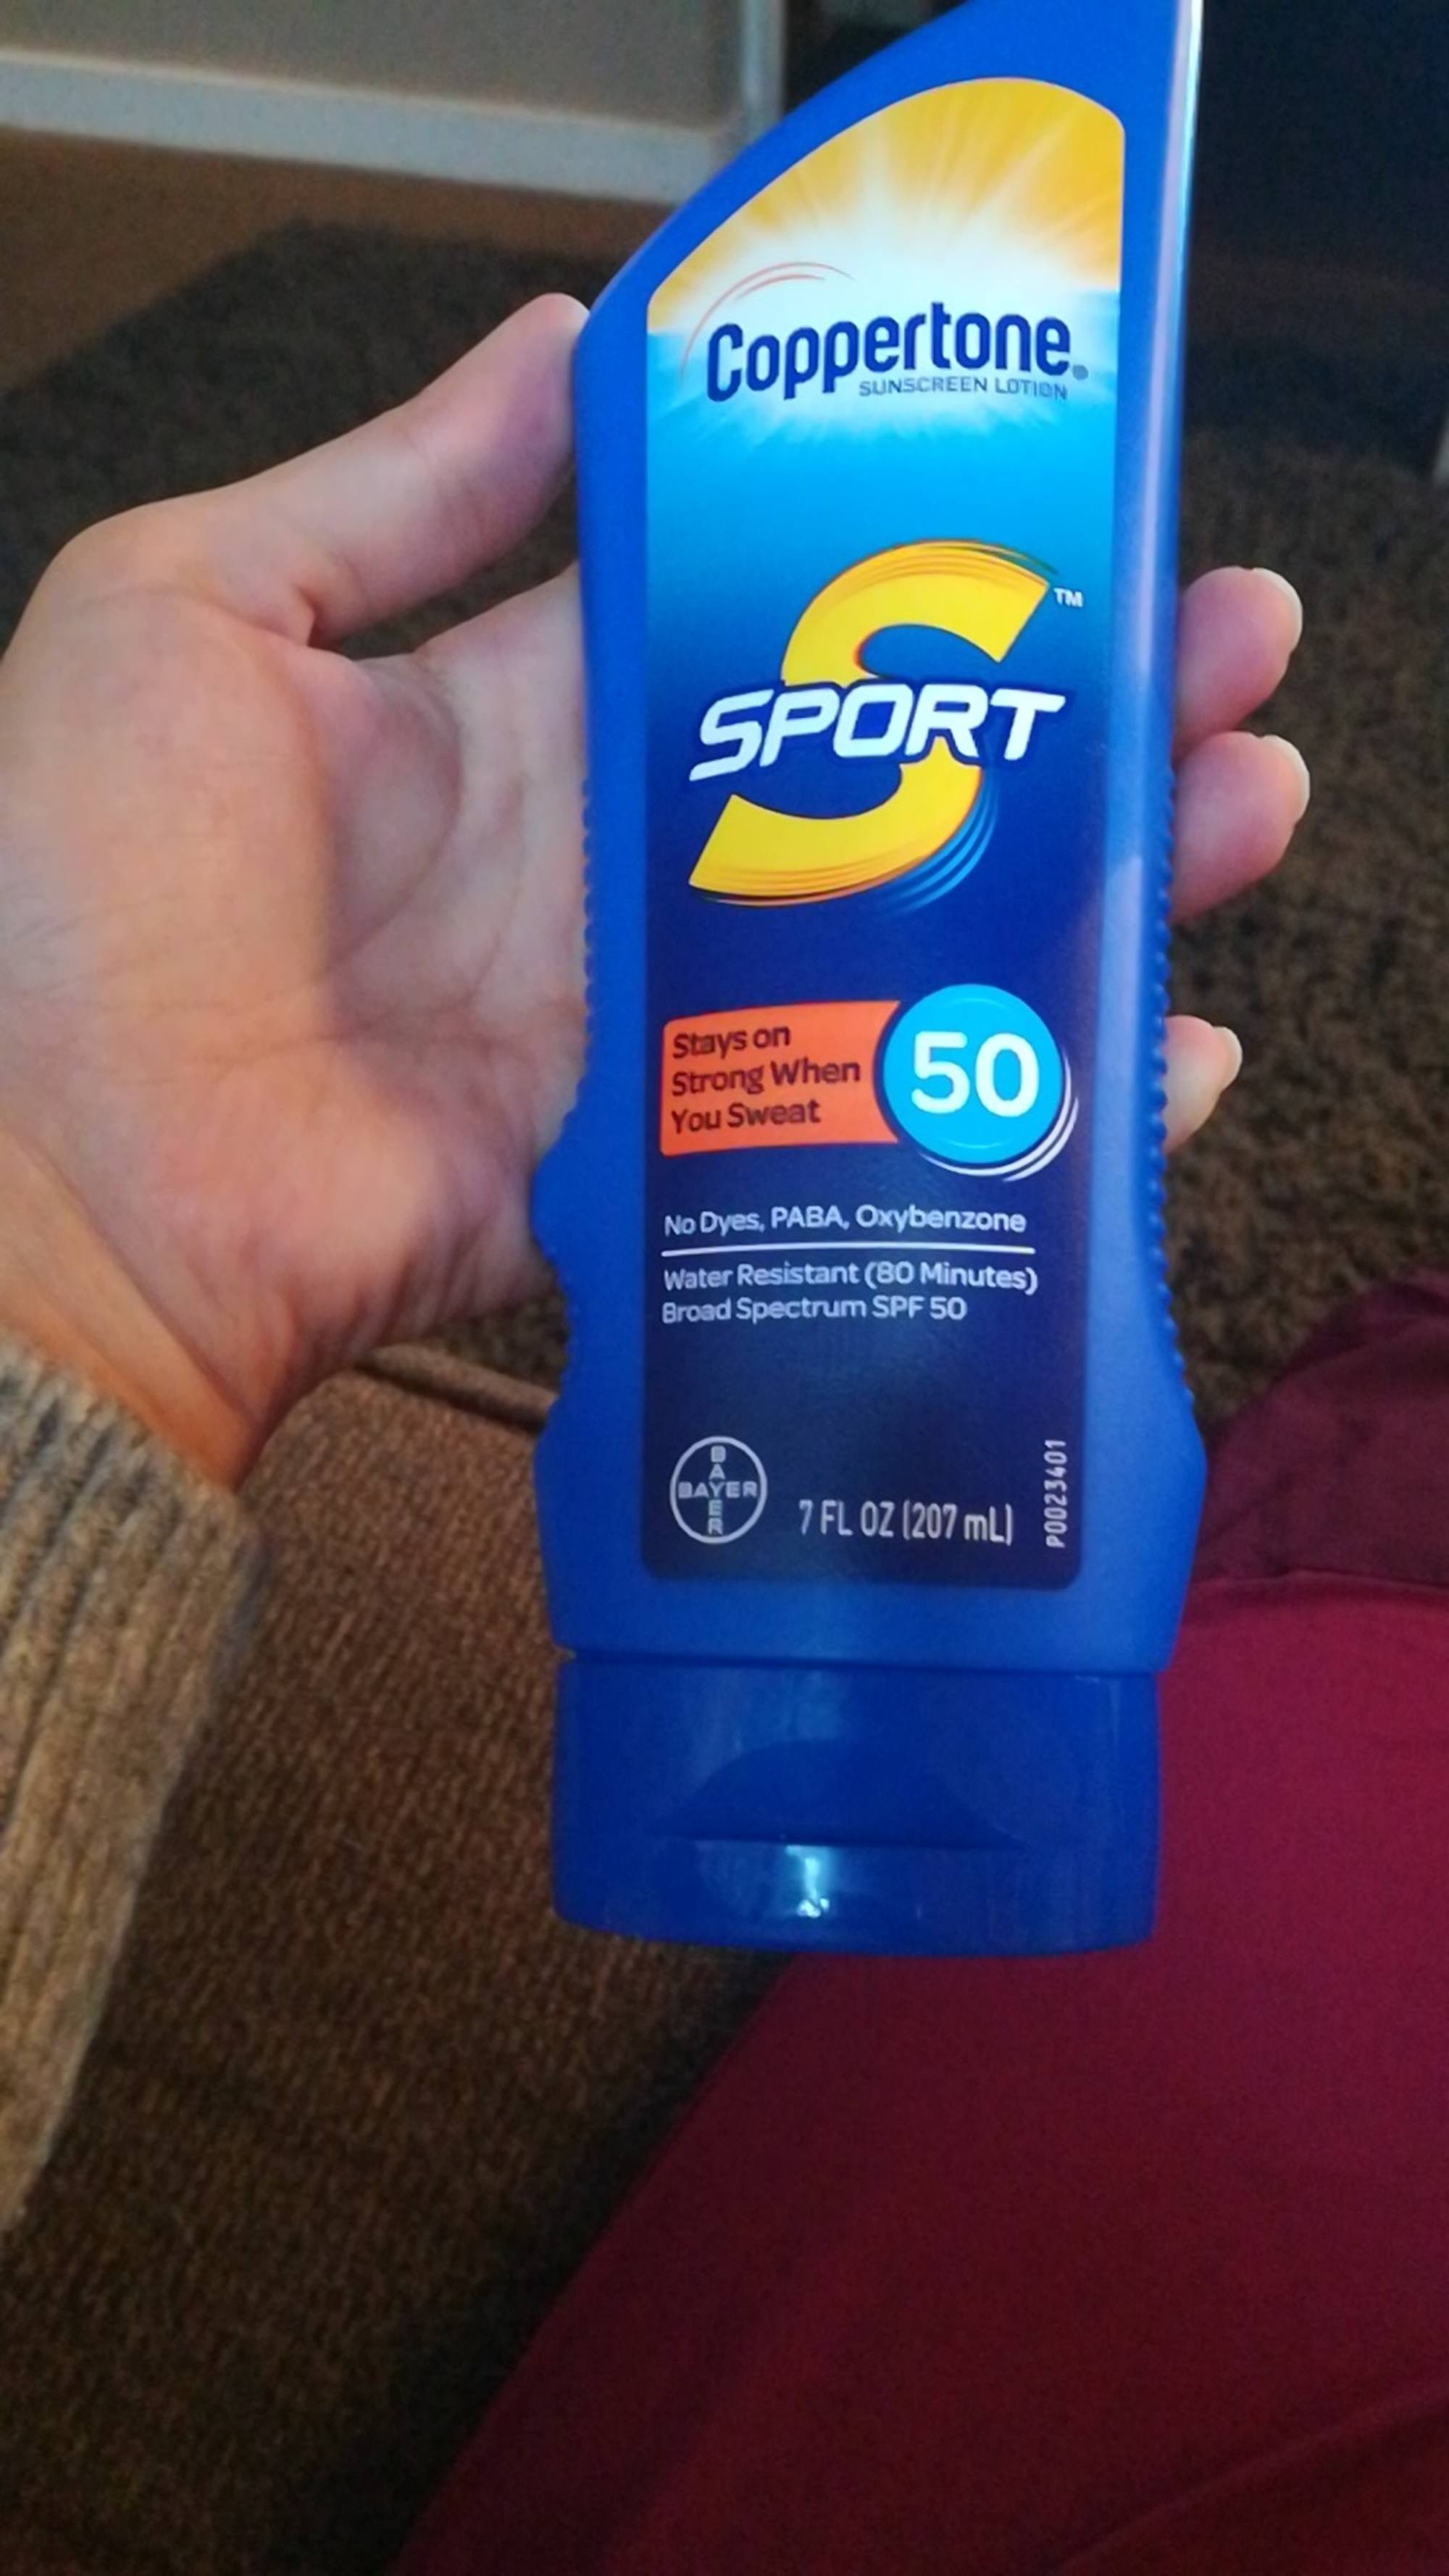 COPPERTONE - Sport - Sunscreen lotion SPF 50